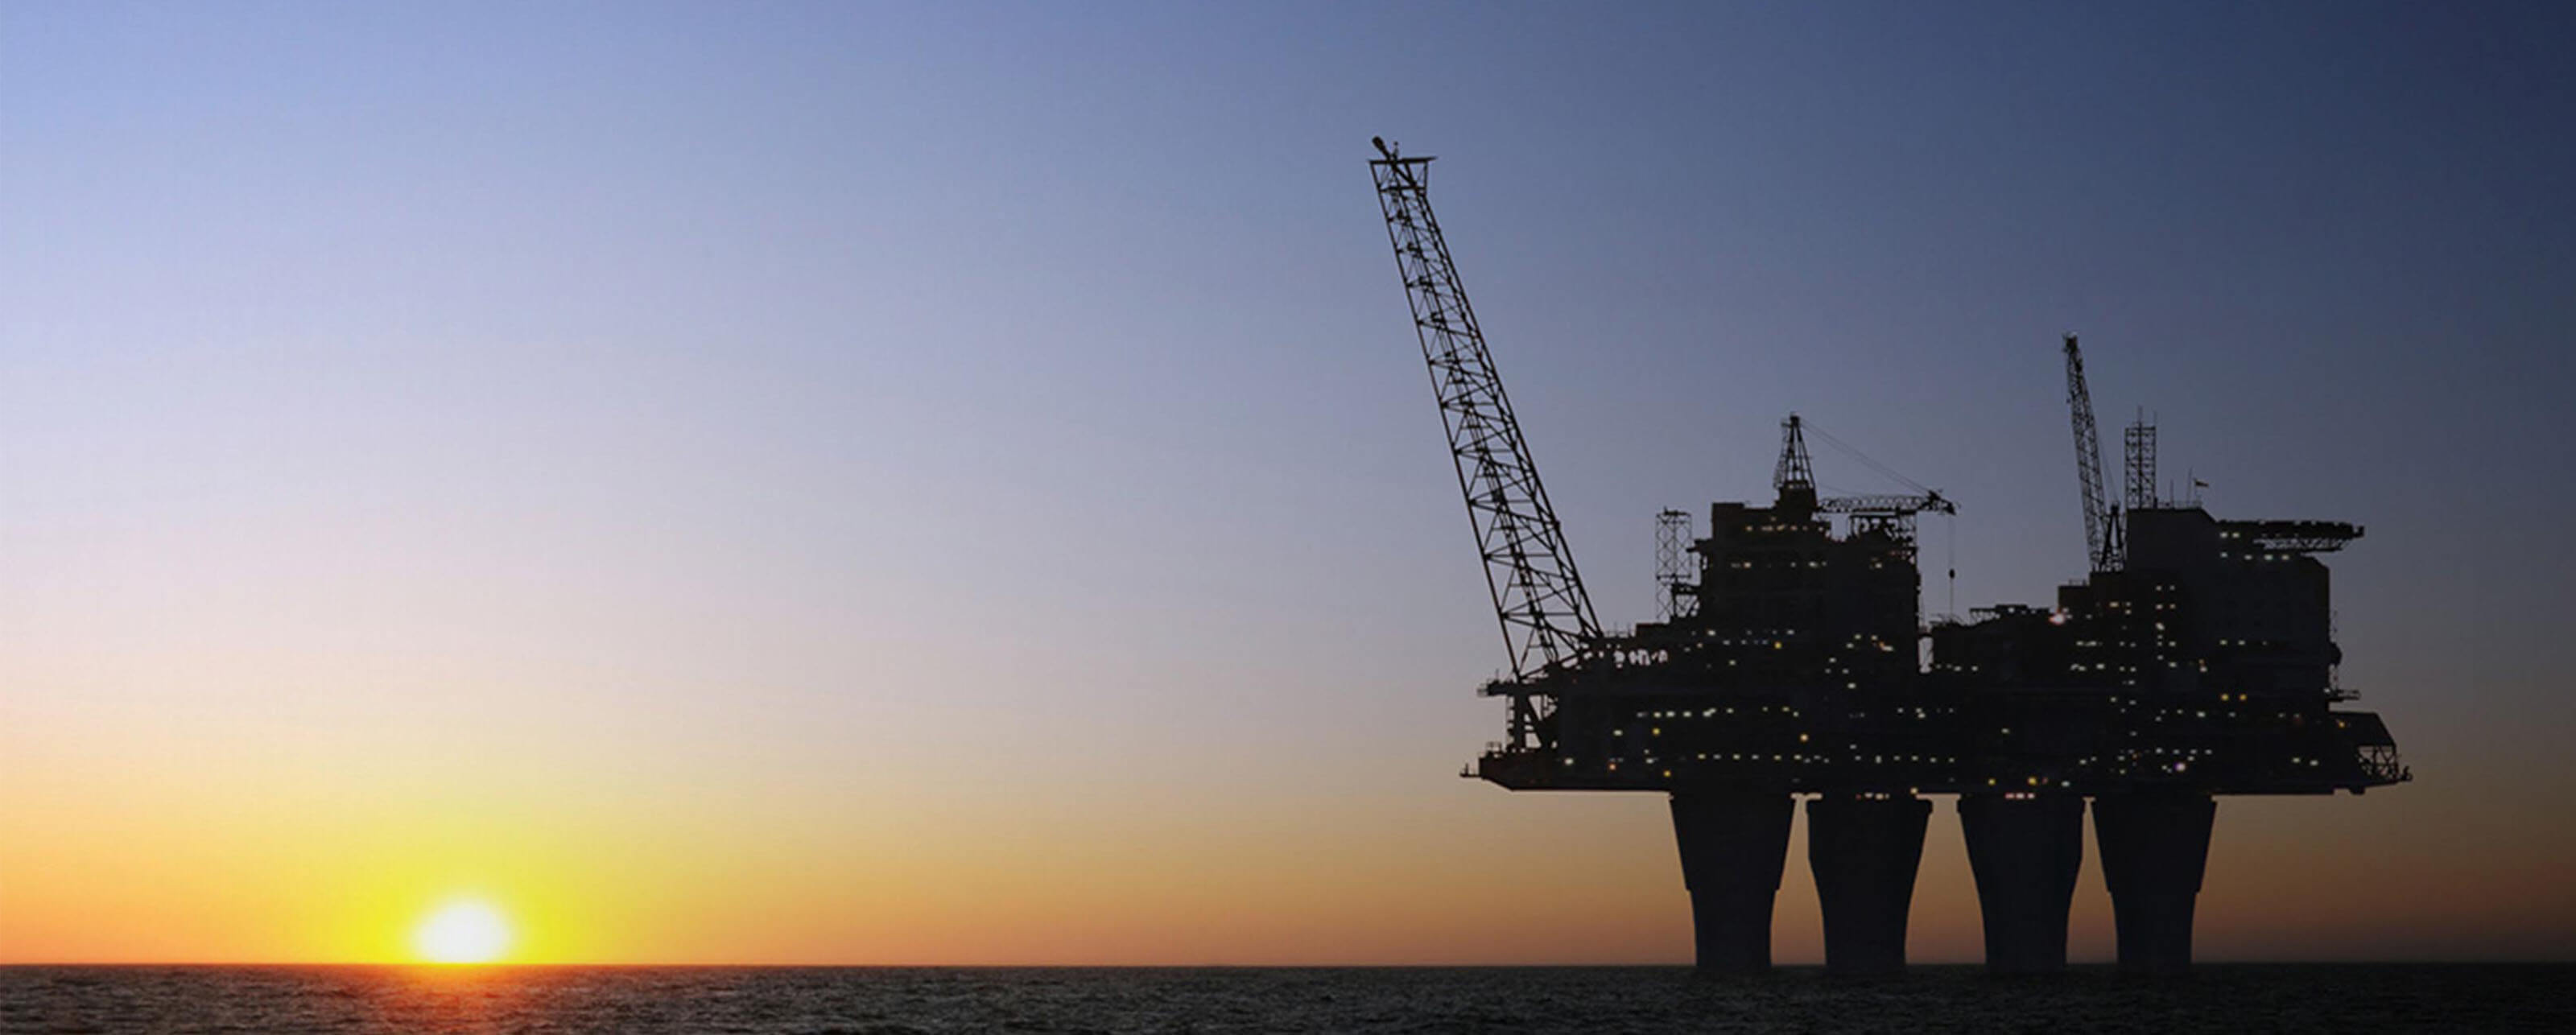 Offshore oil rig | GE DigitalOffshore oil rig | GE Digital